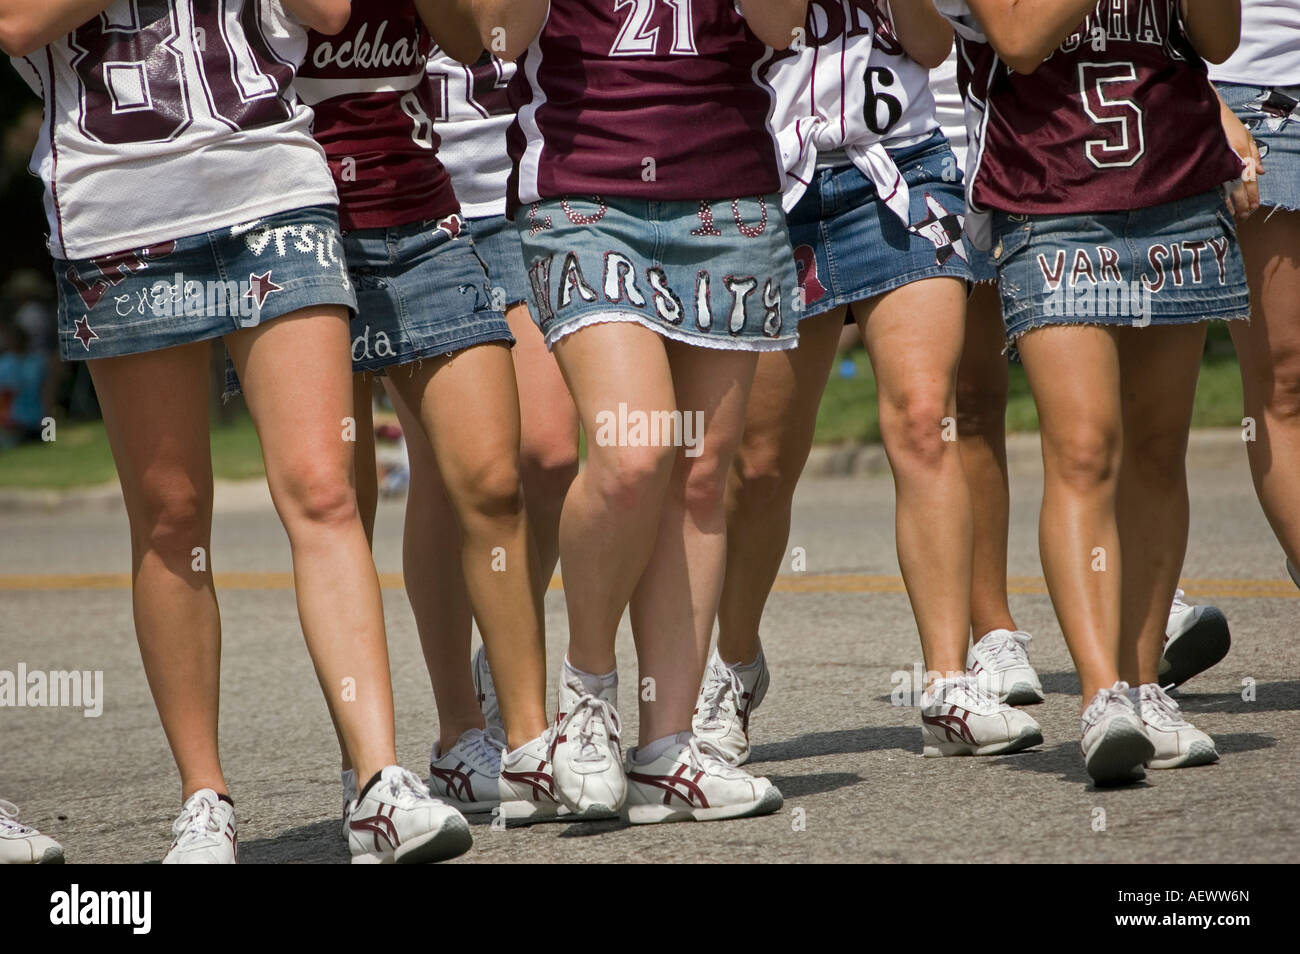 Cheerleading Group Skirt, Hiking Shorts Leggings